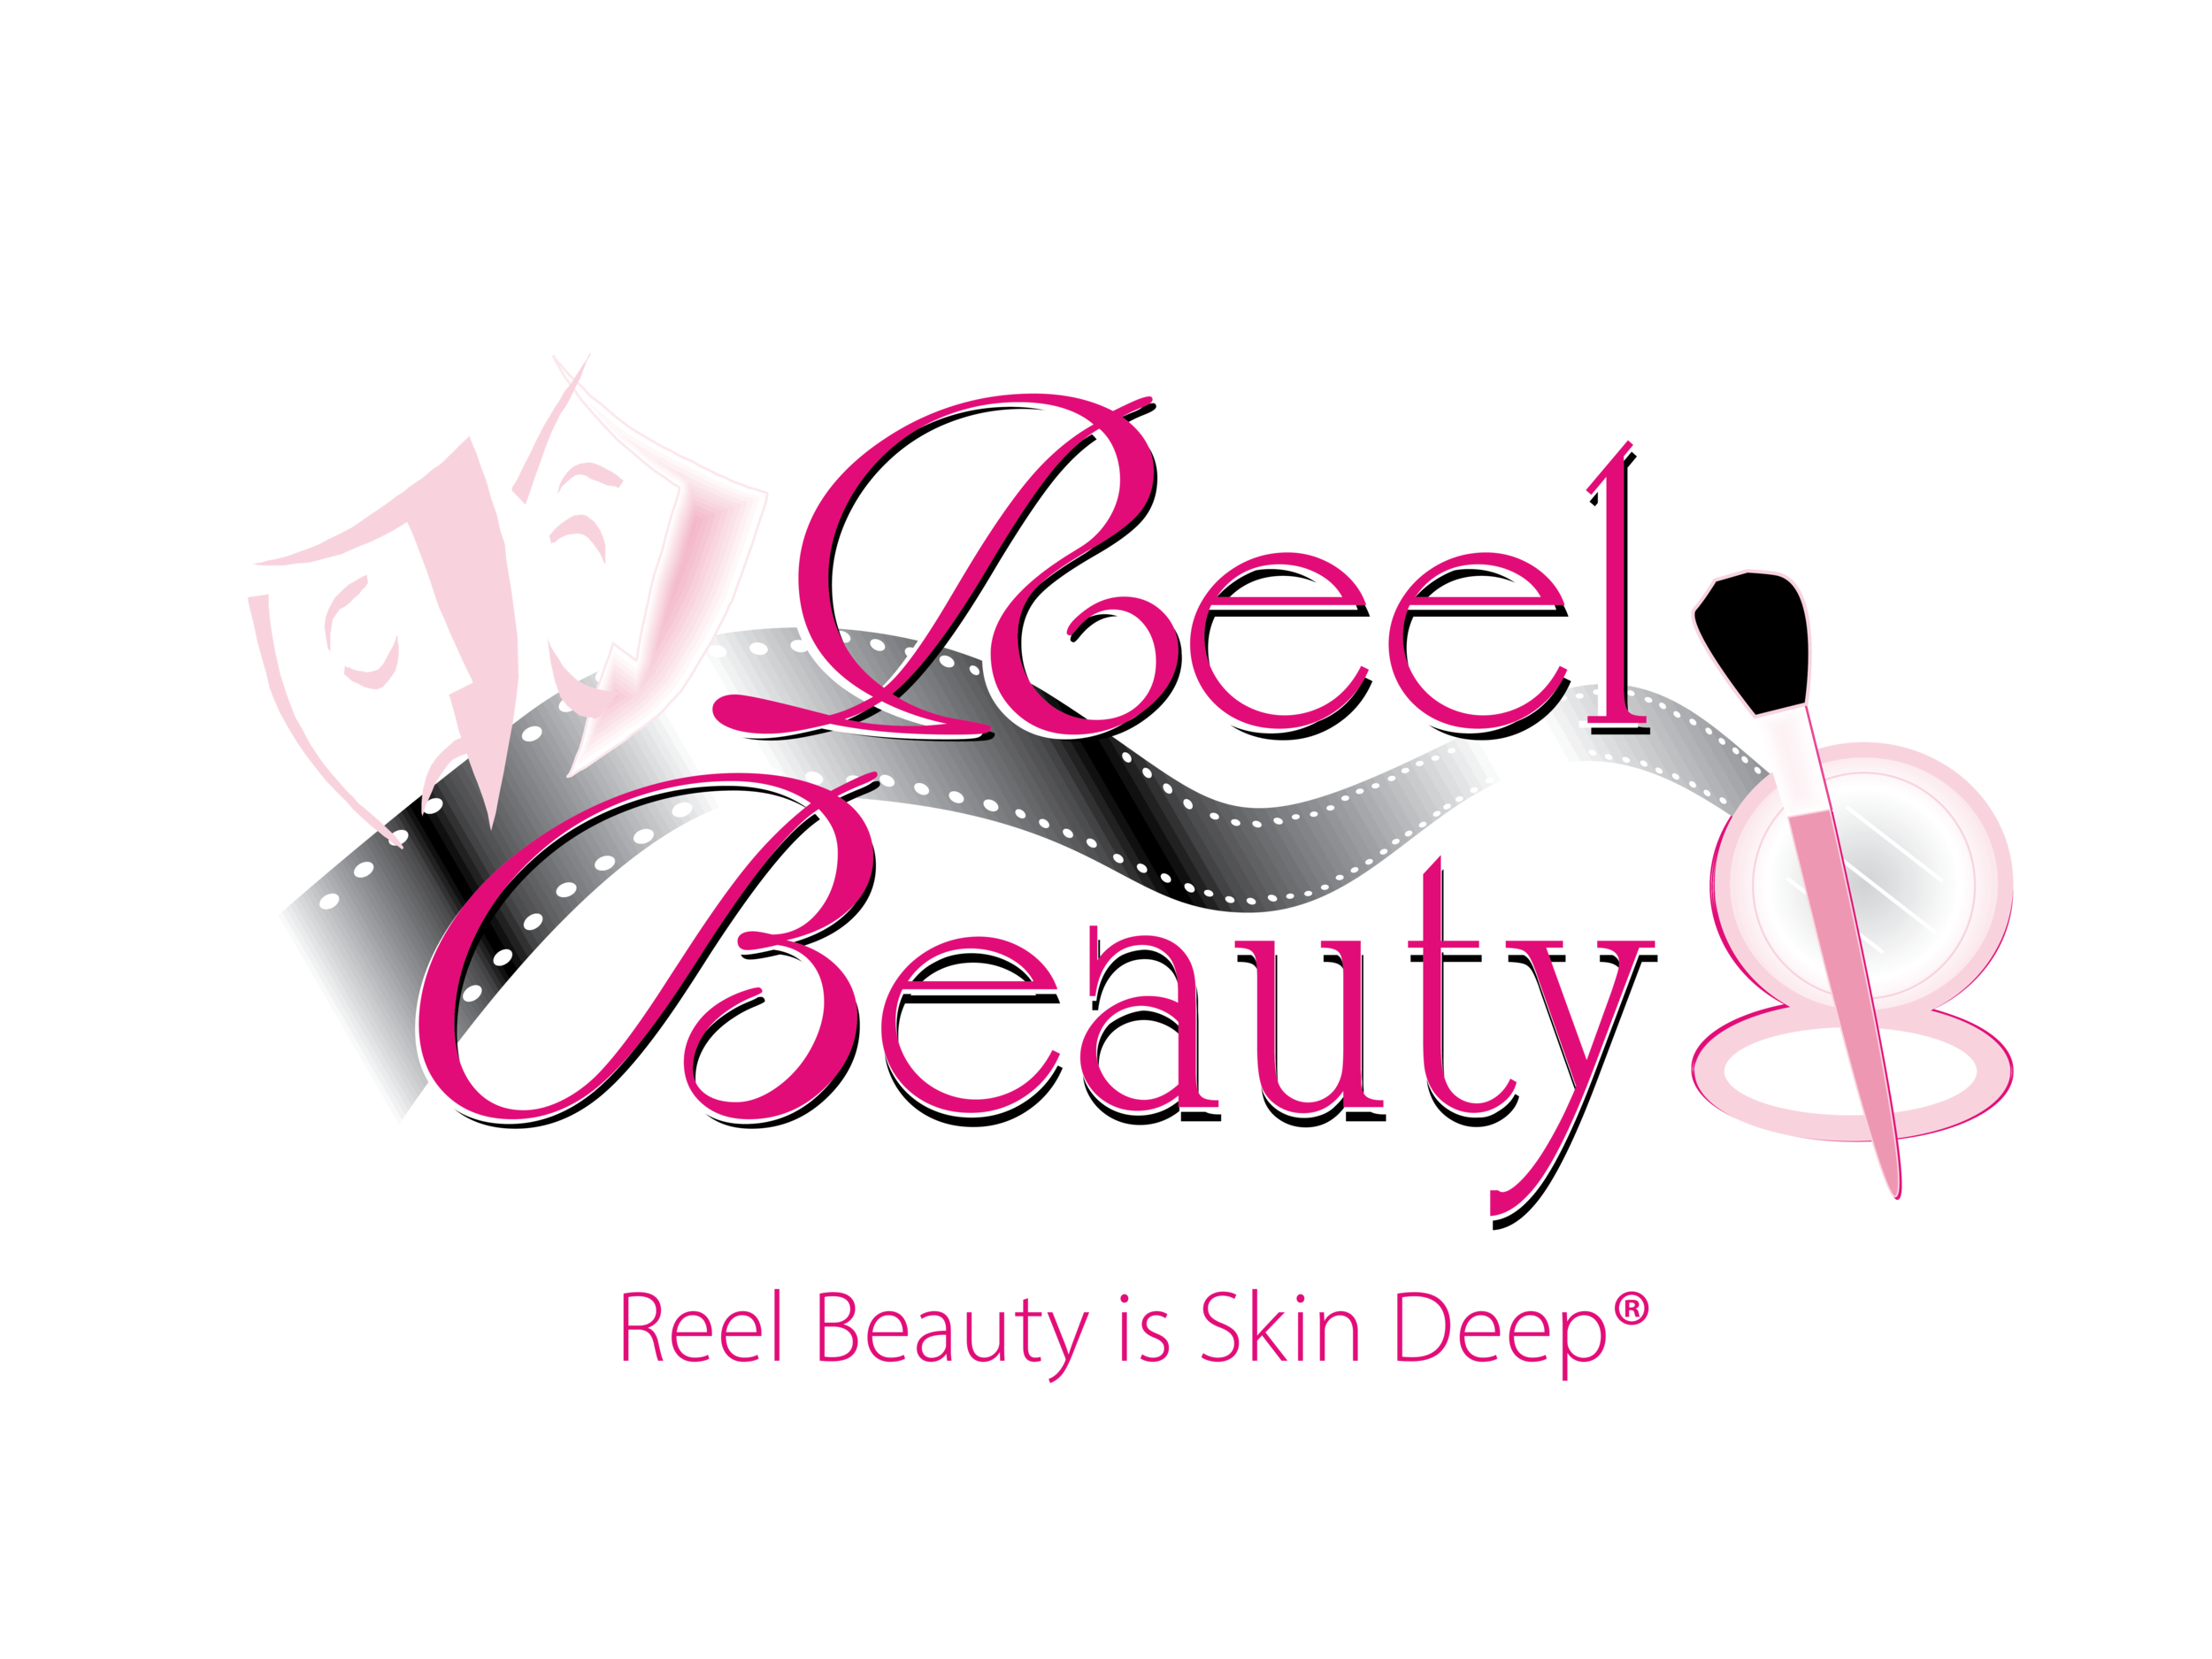 Reel Beauty Inc. (RBI)